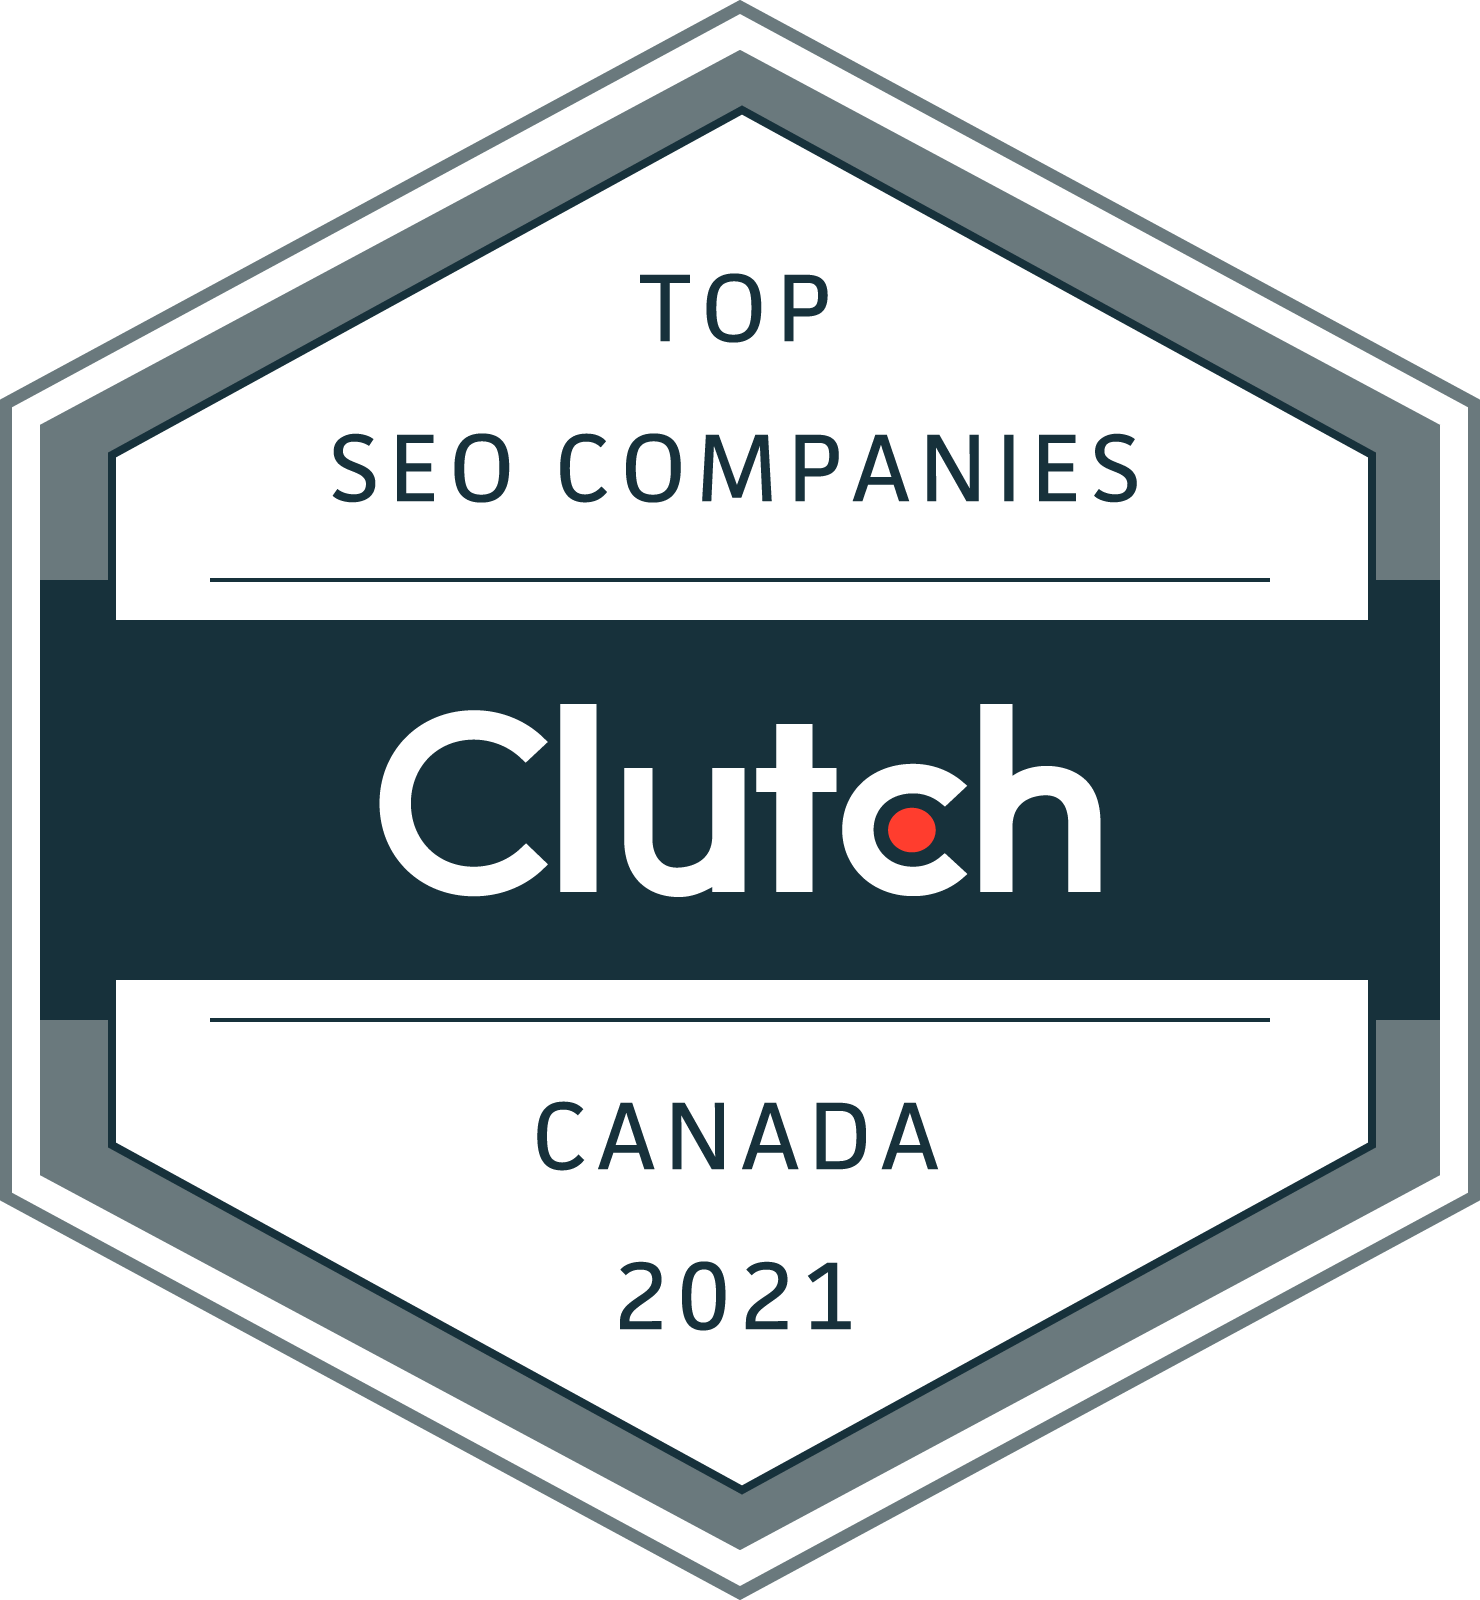 Clutch Top SEO Companies Canada 2021 badge